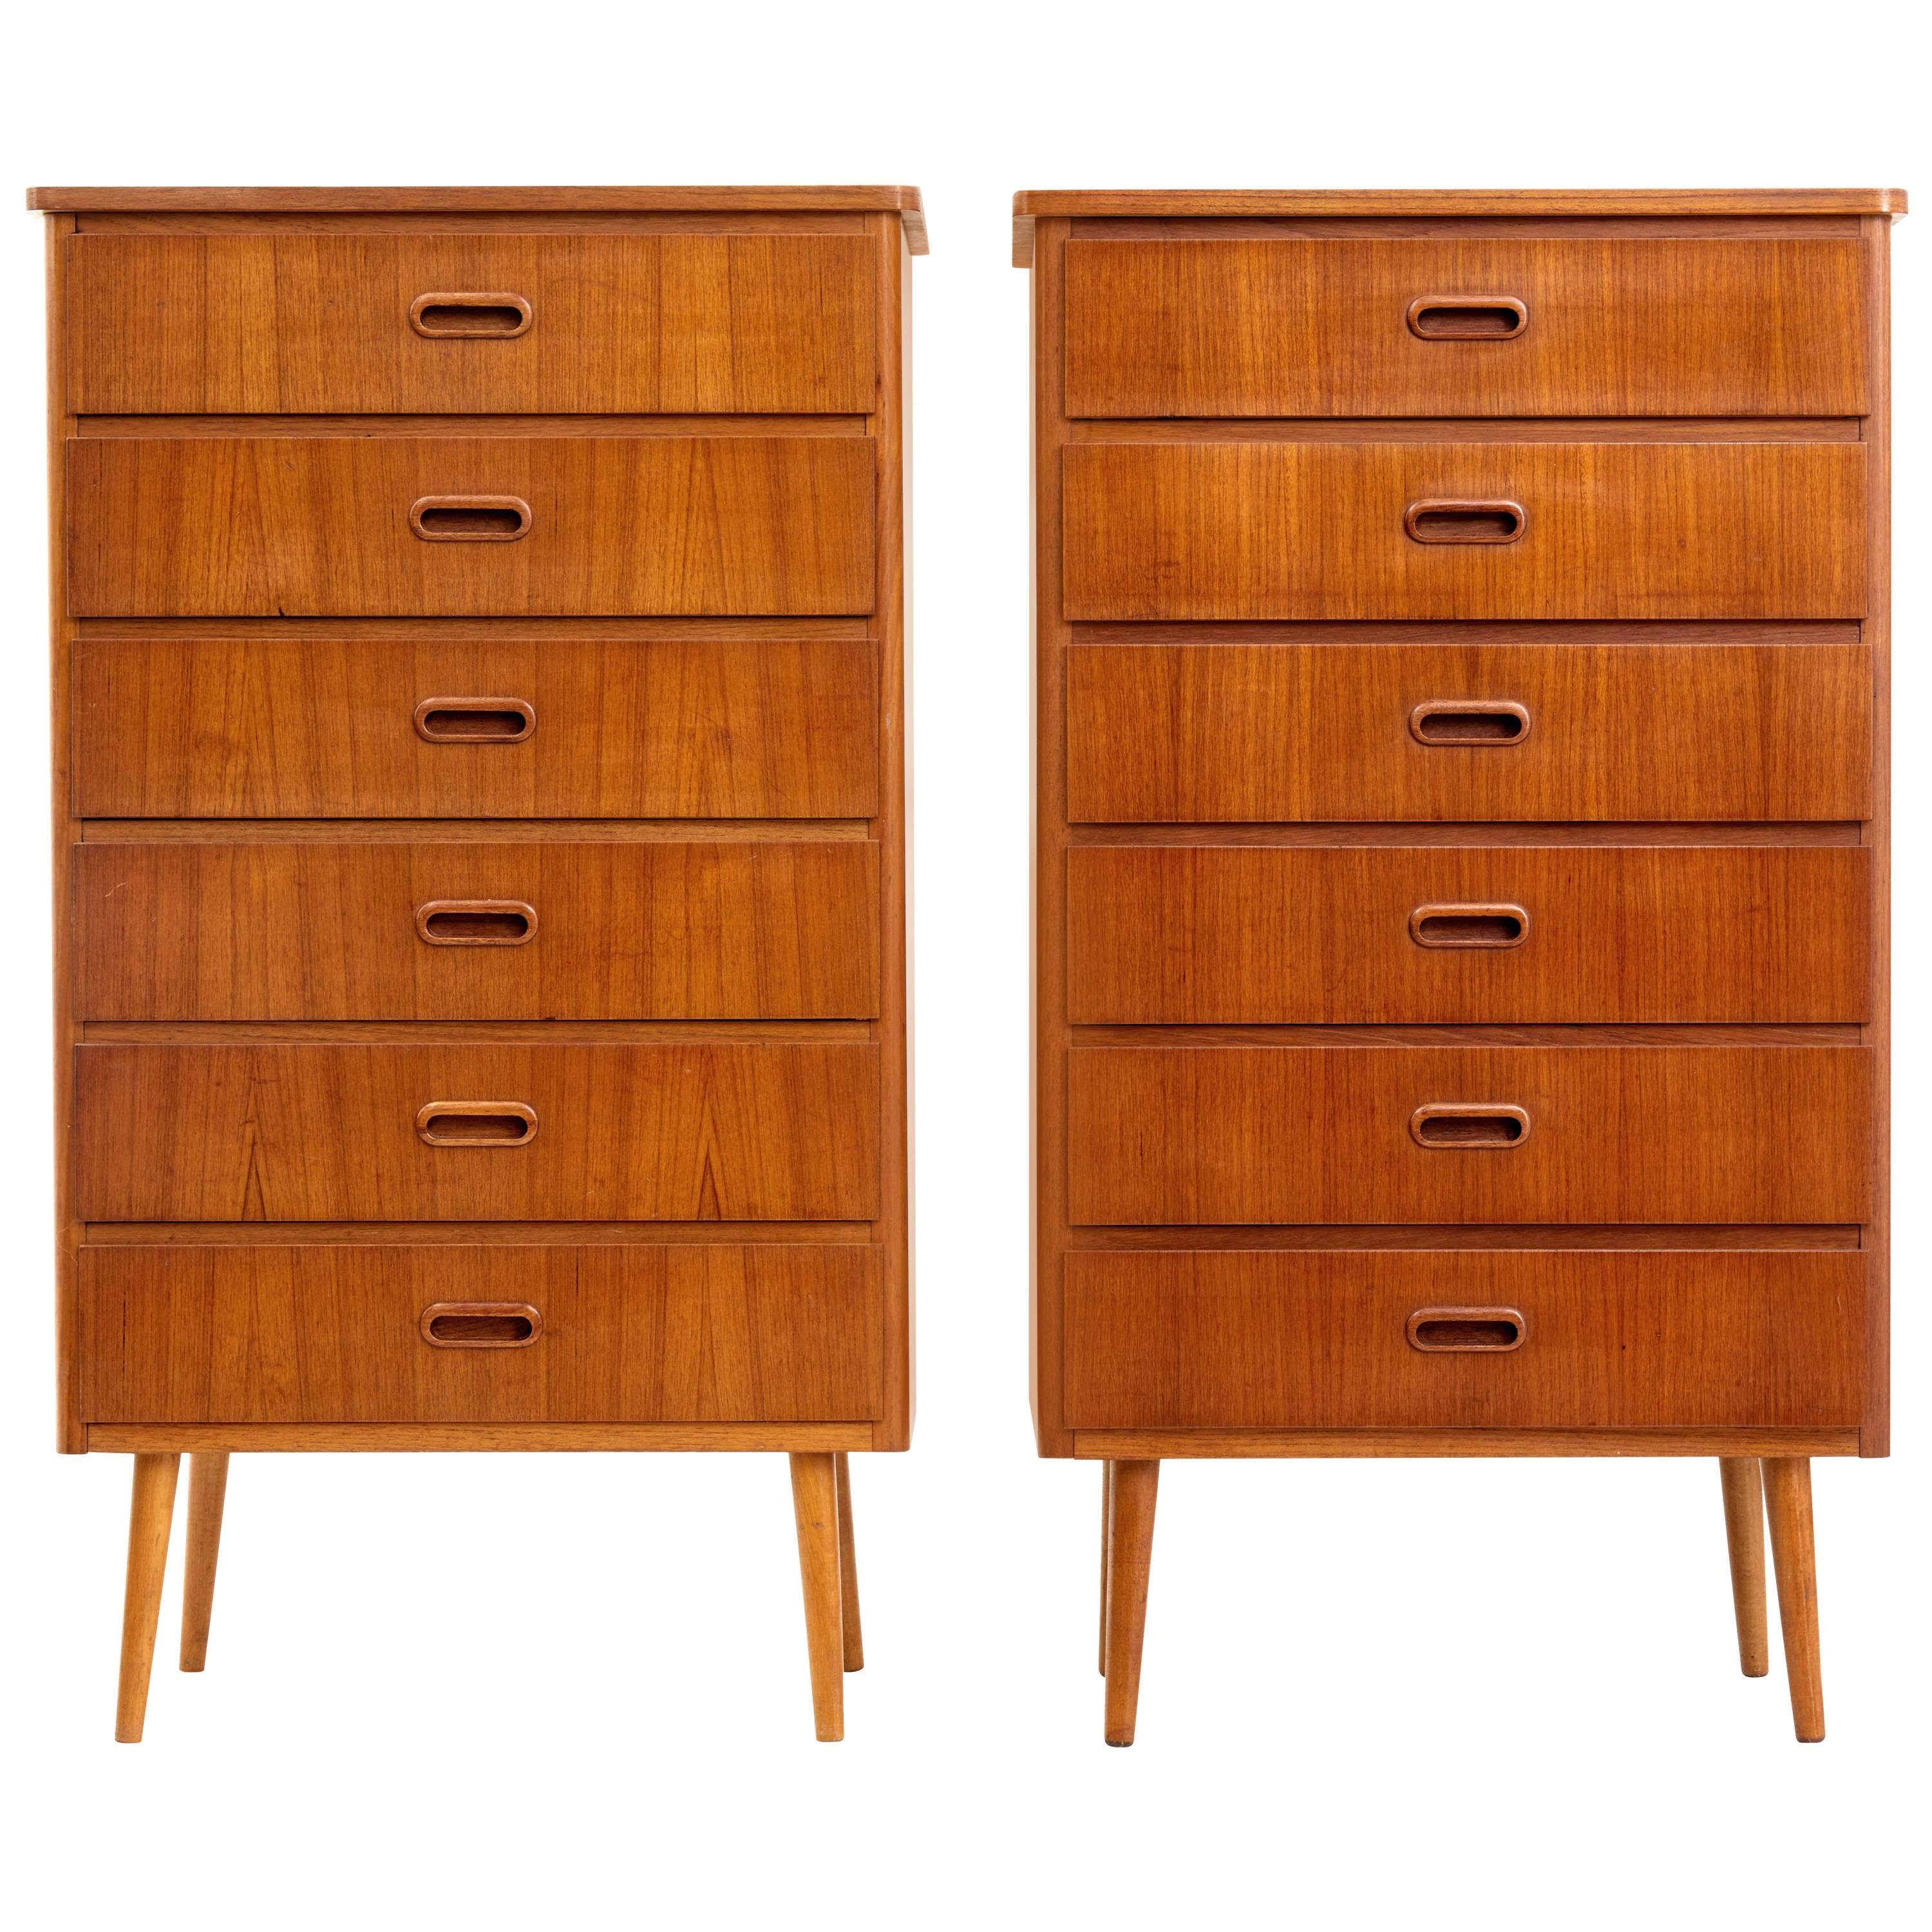 Pair of 1970's Scandinavian tall teak chest of drawers